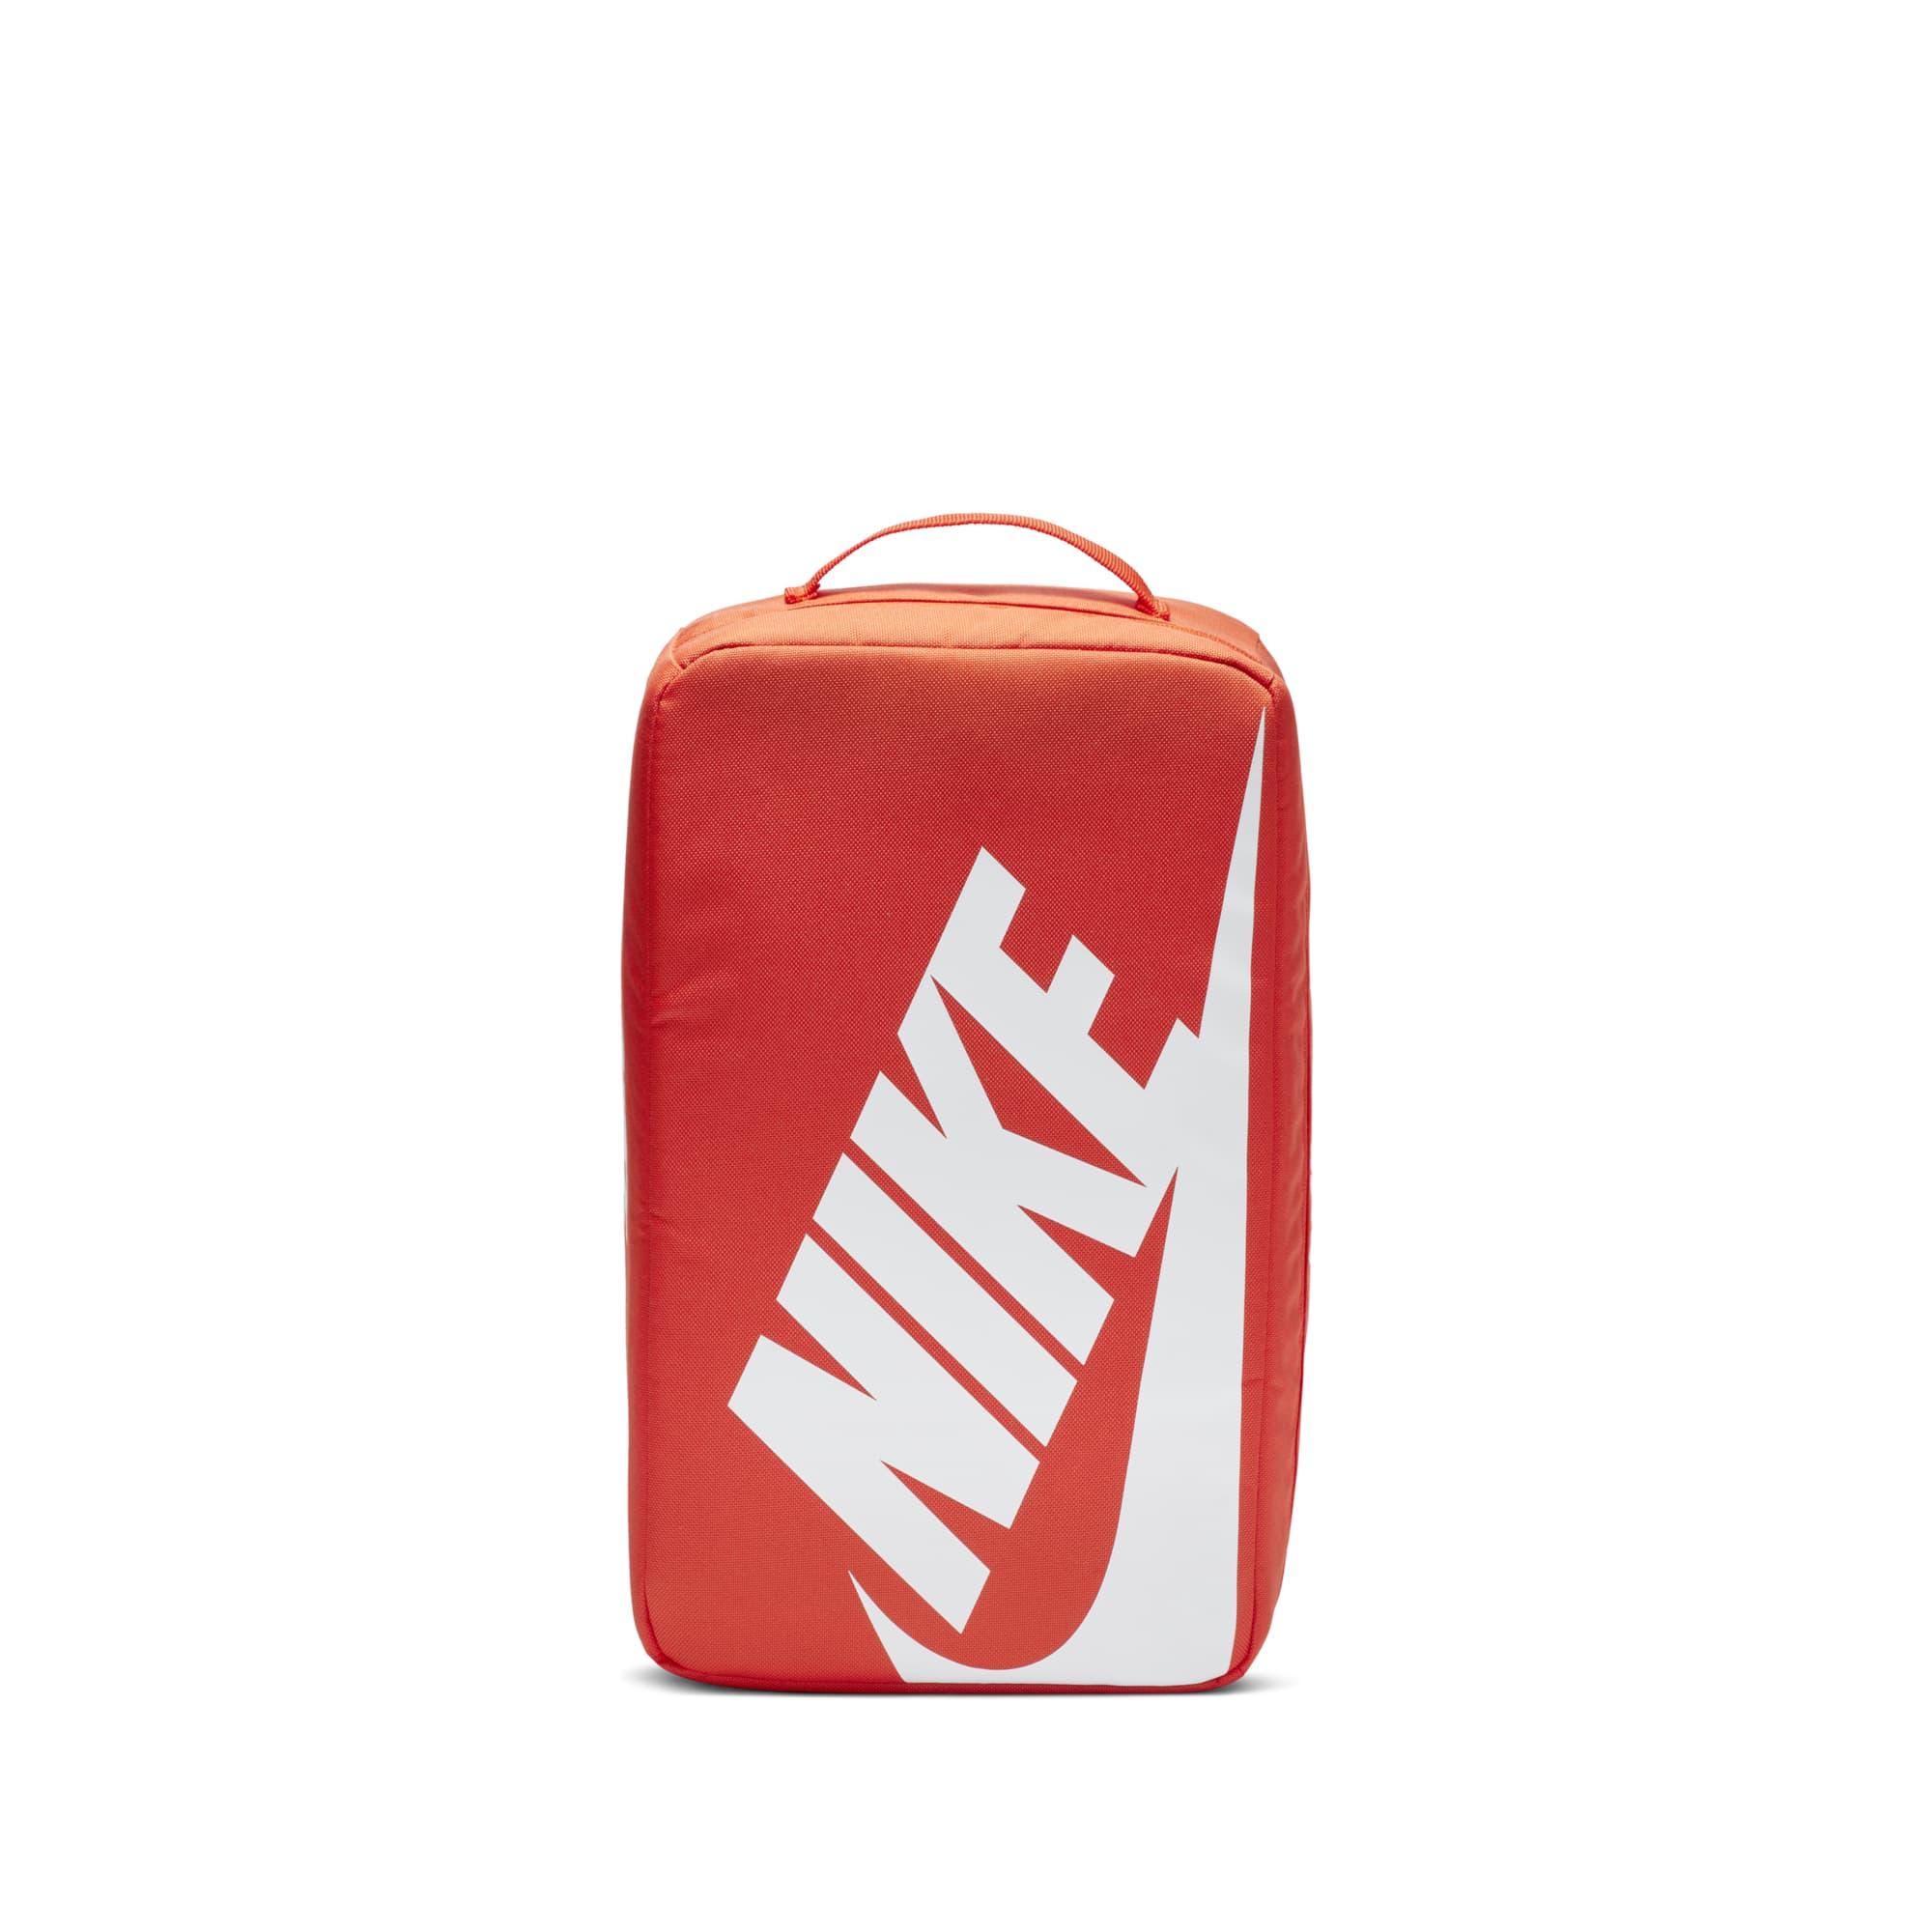 Nike Synthetic Shoe Box Bag in Orange,Orange,White (Orange) for Men - Save  15% | Lyst